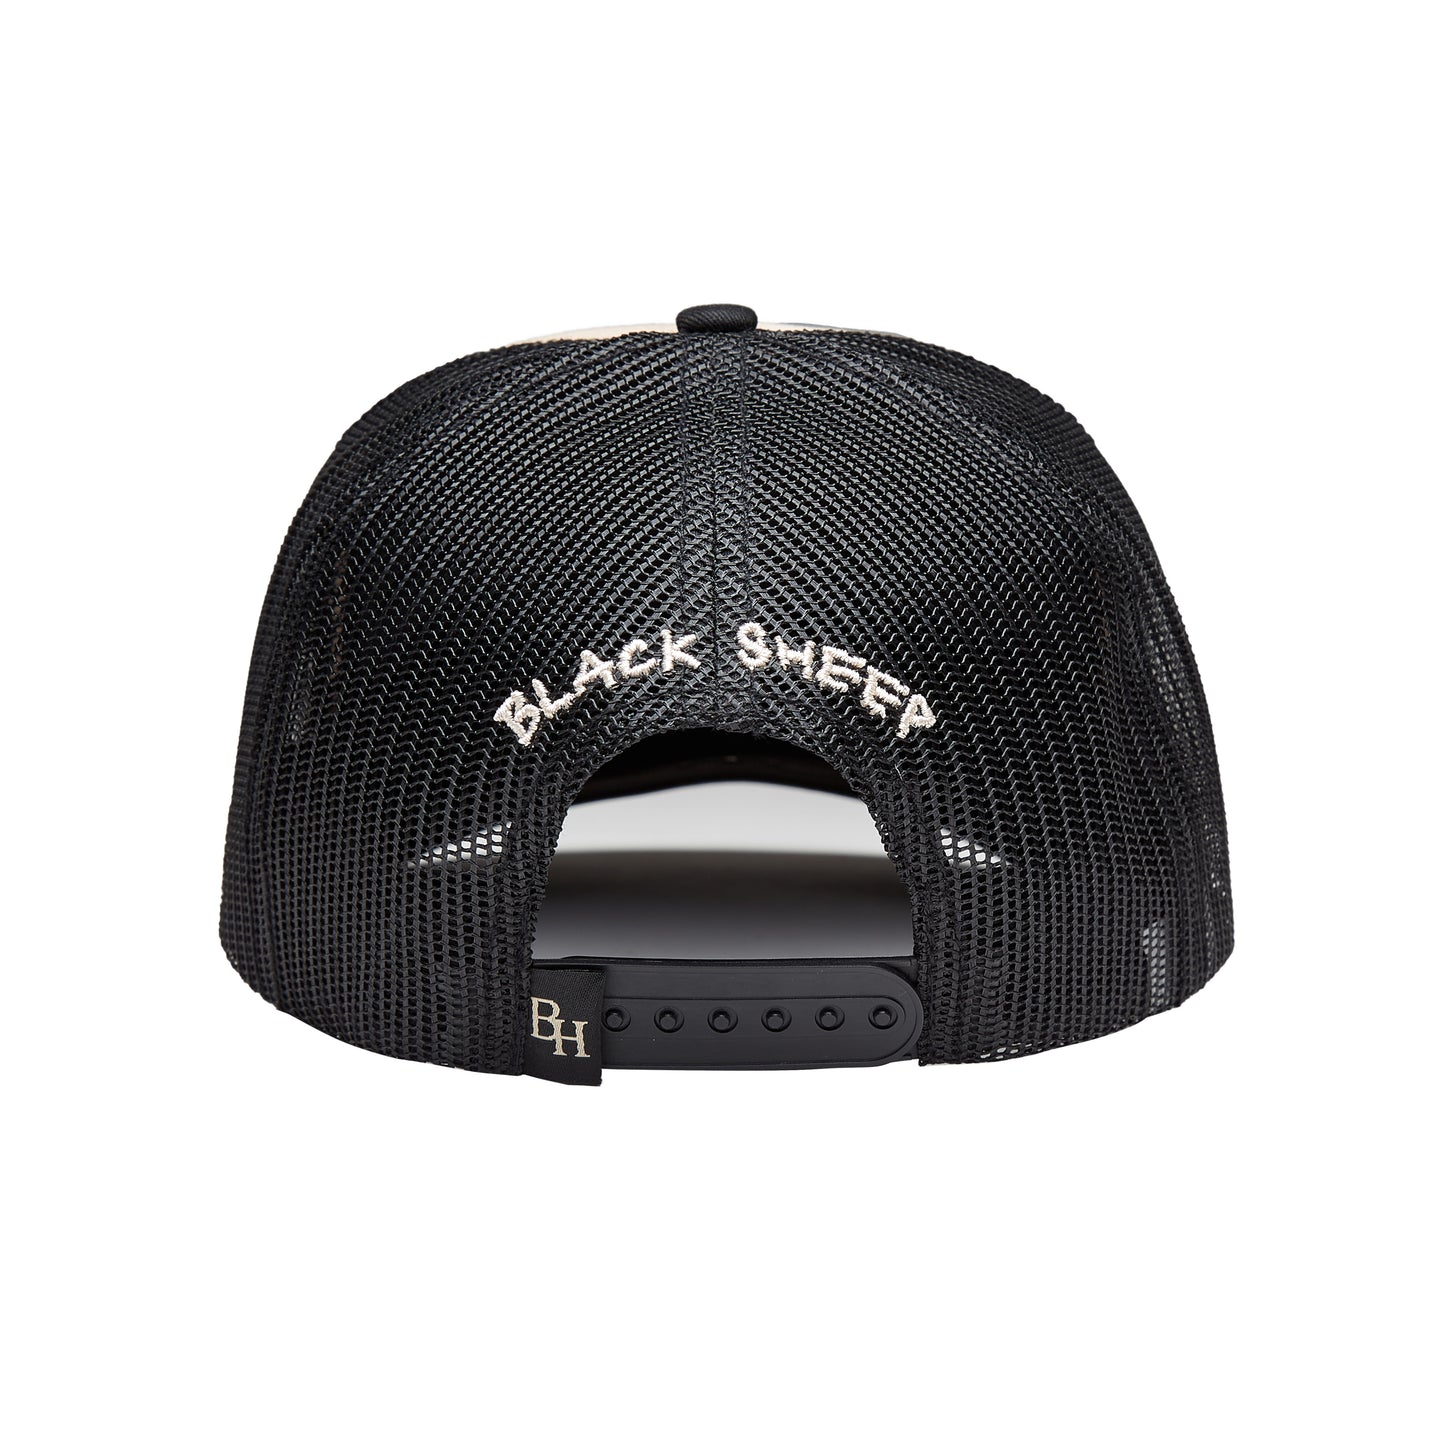 The Black Sheep - Black/Khaki Trucker